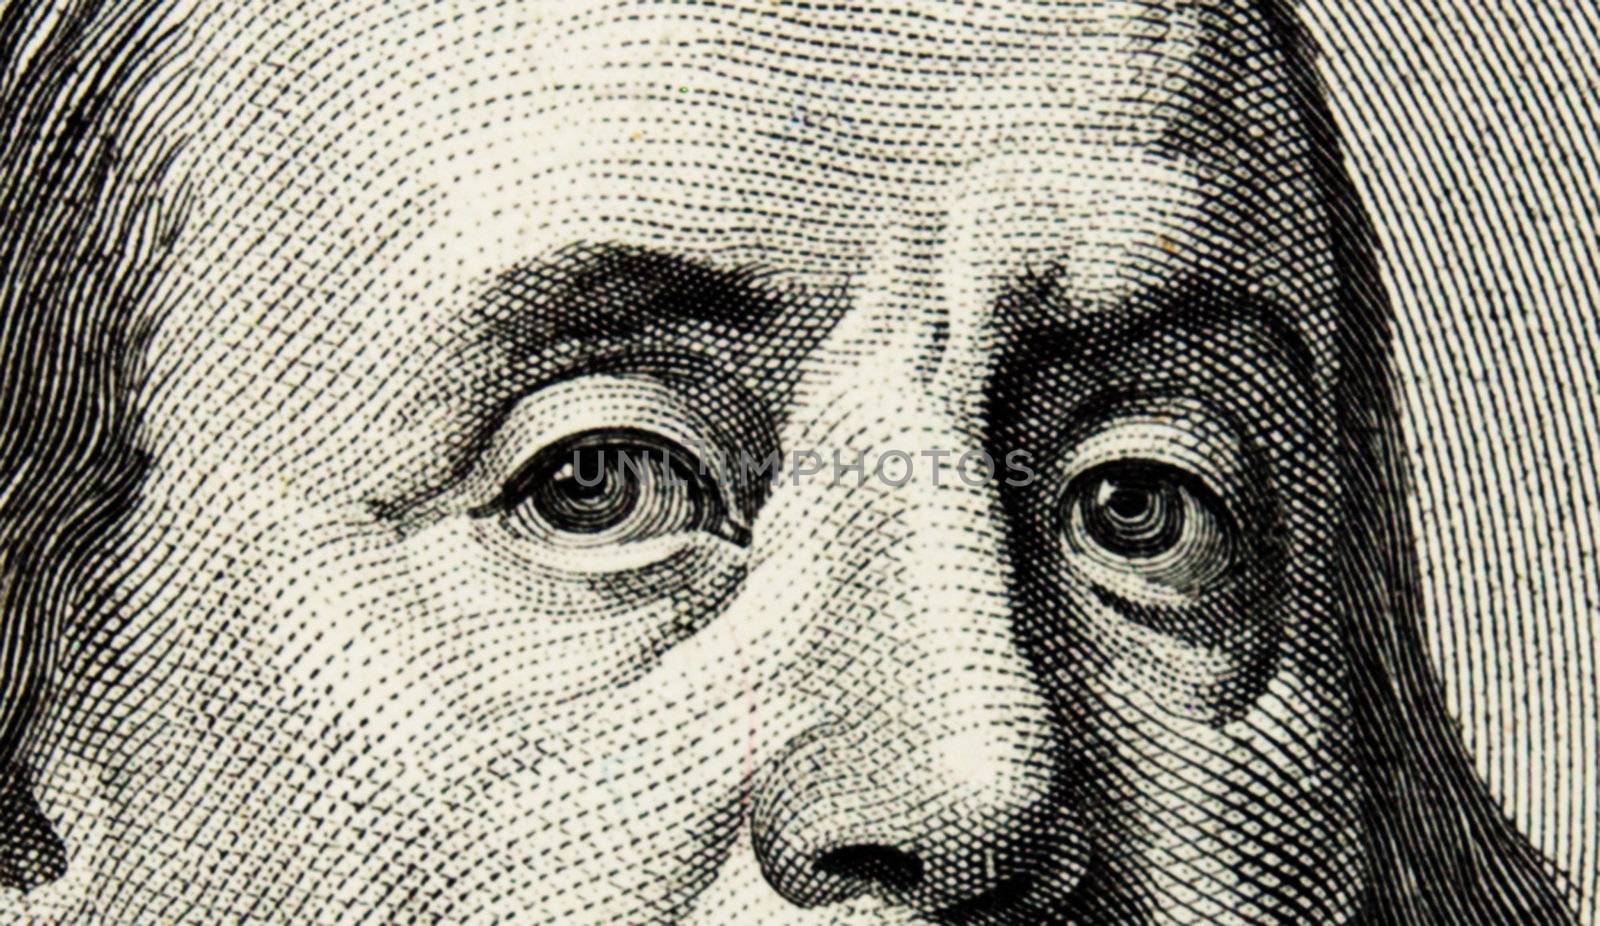 Hundred dollar bill, eye Franklin background, textures  by schankz